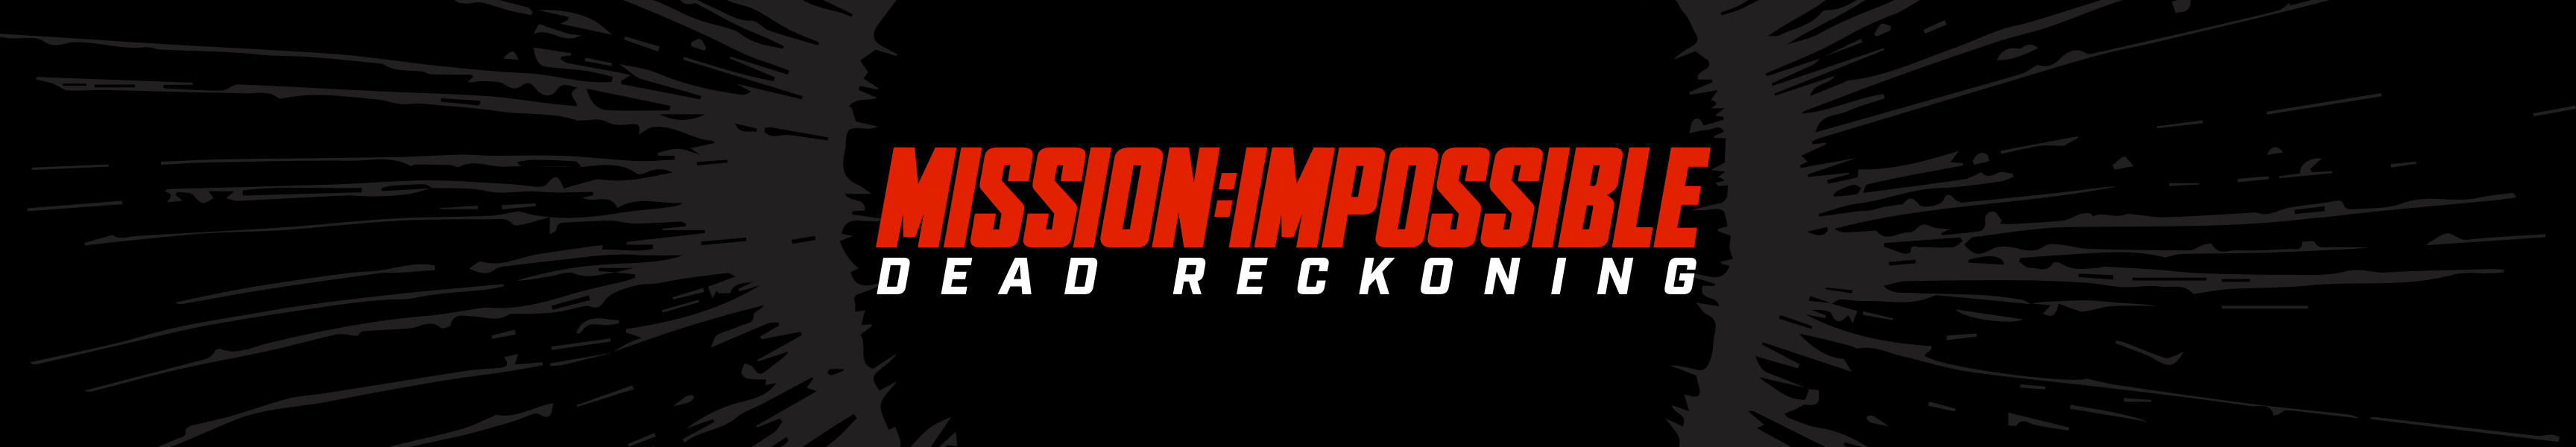 Mission: Impossible Accessoires